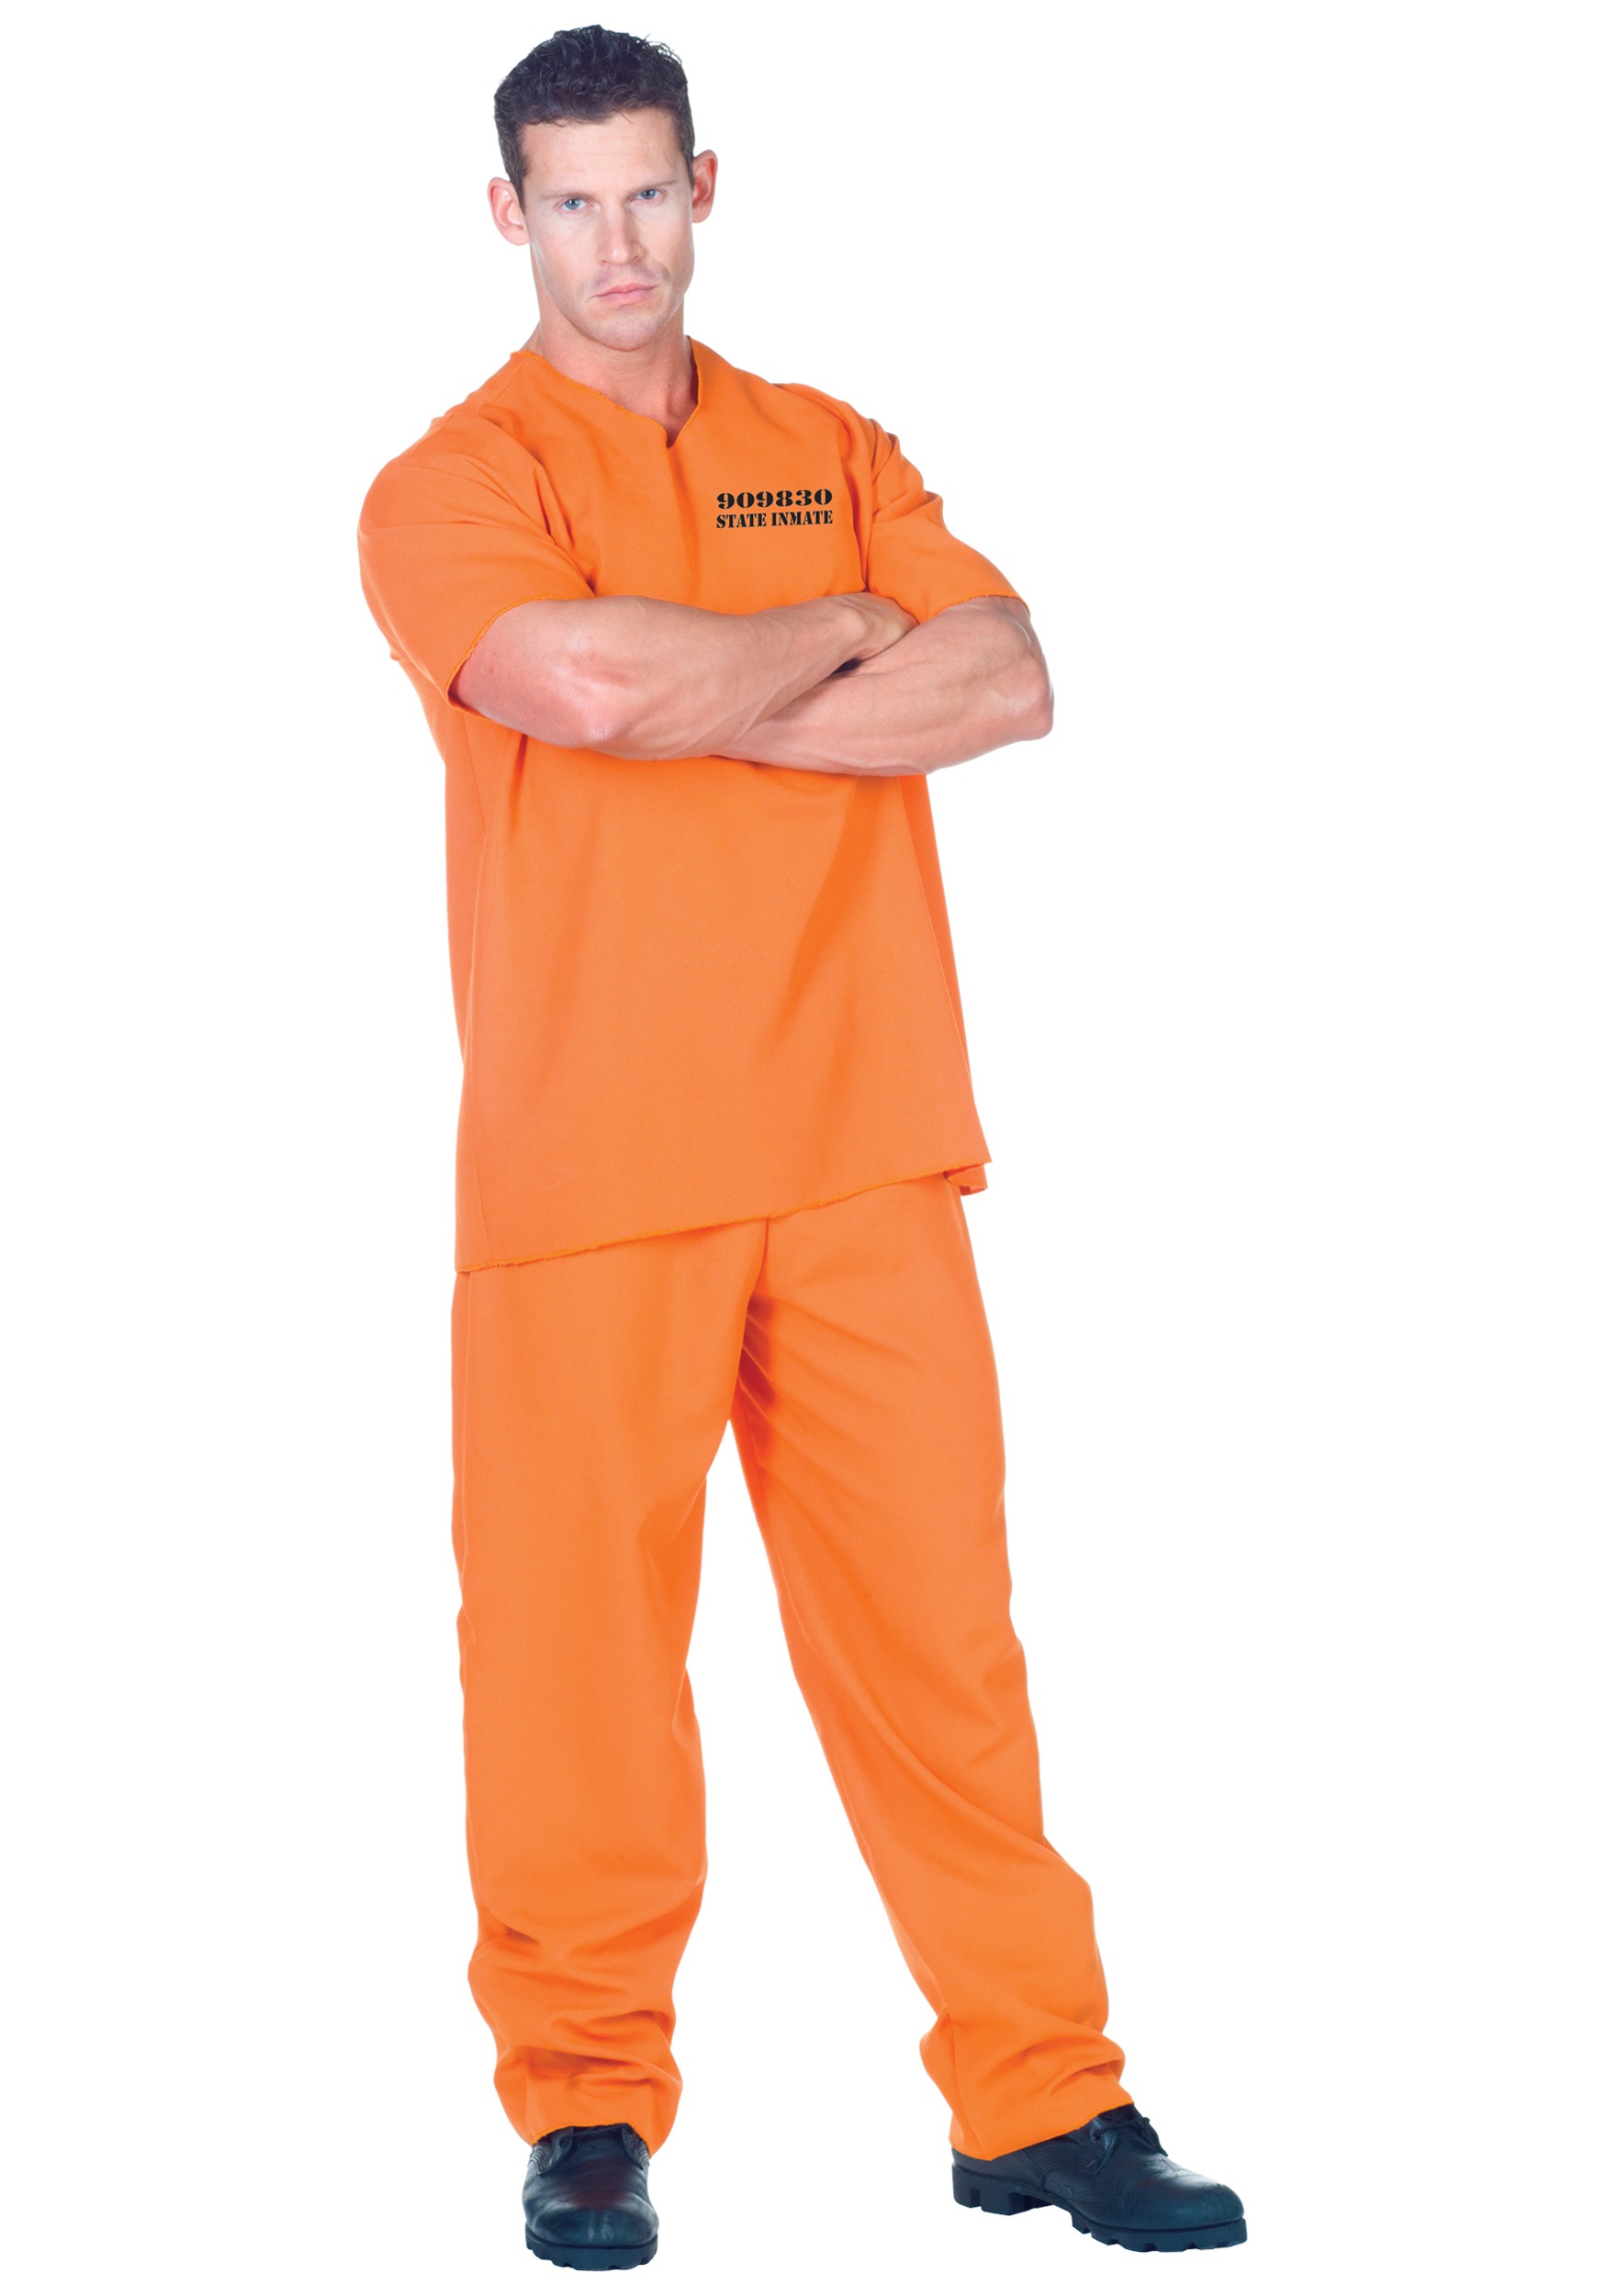 Plus Size Orange Jumpsuit Prisoner Costume For Adults